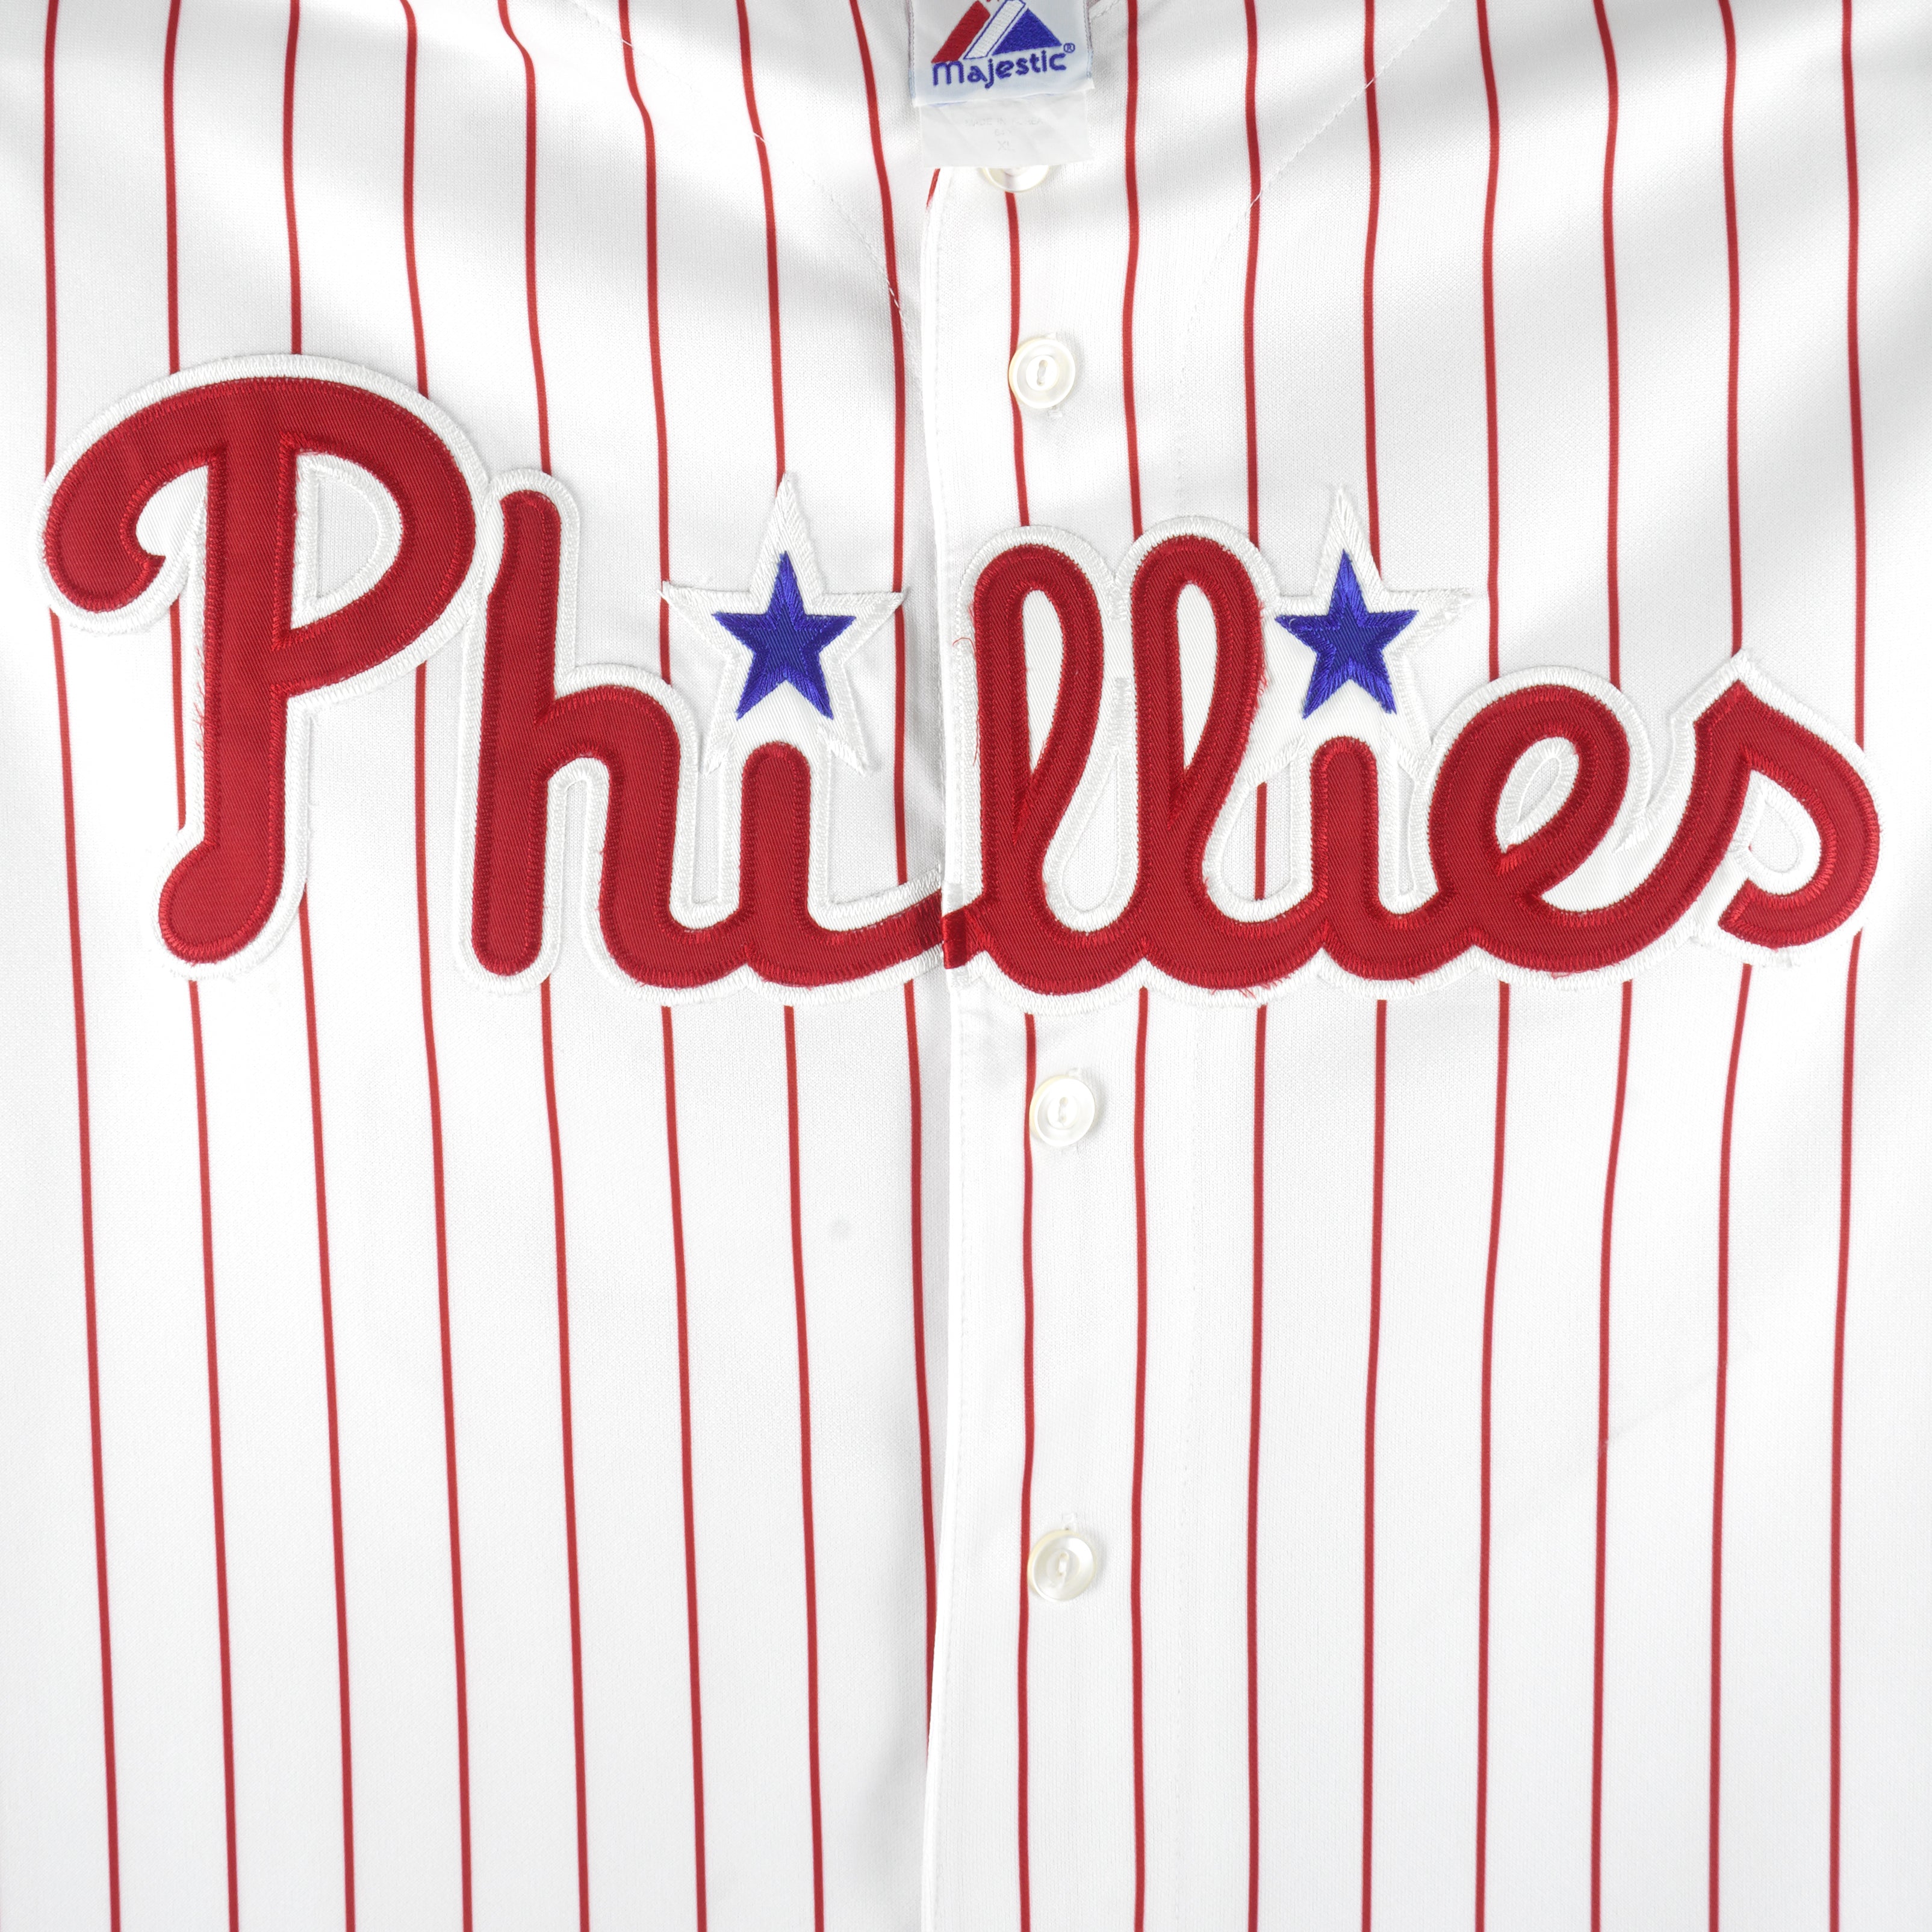 Philadelphia Phillies: 1990's White Pinstripe Russell Athletic